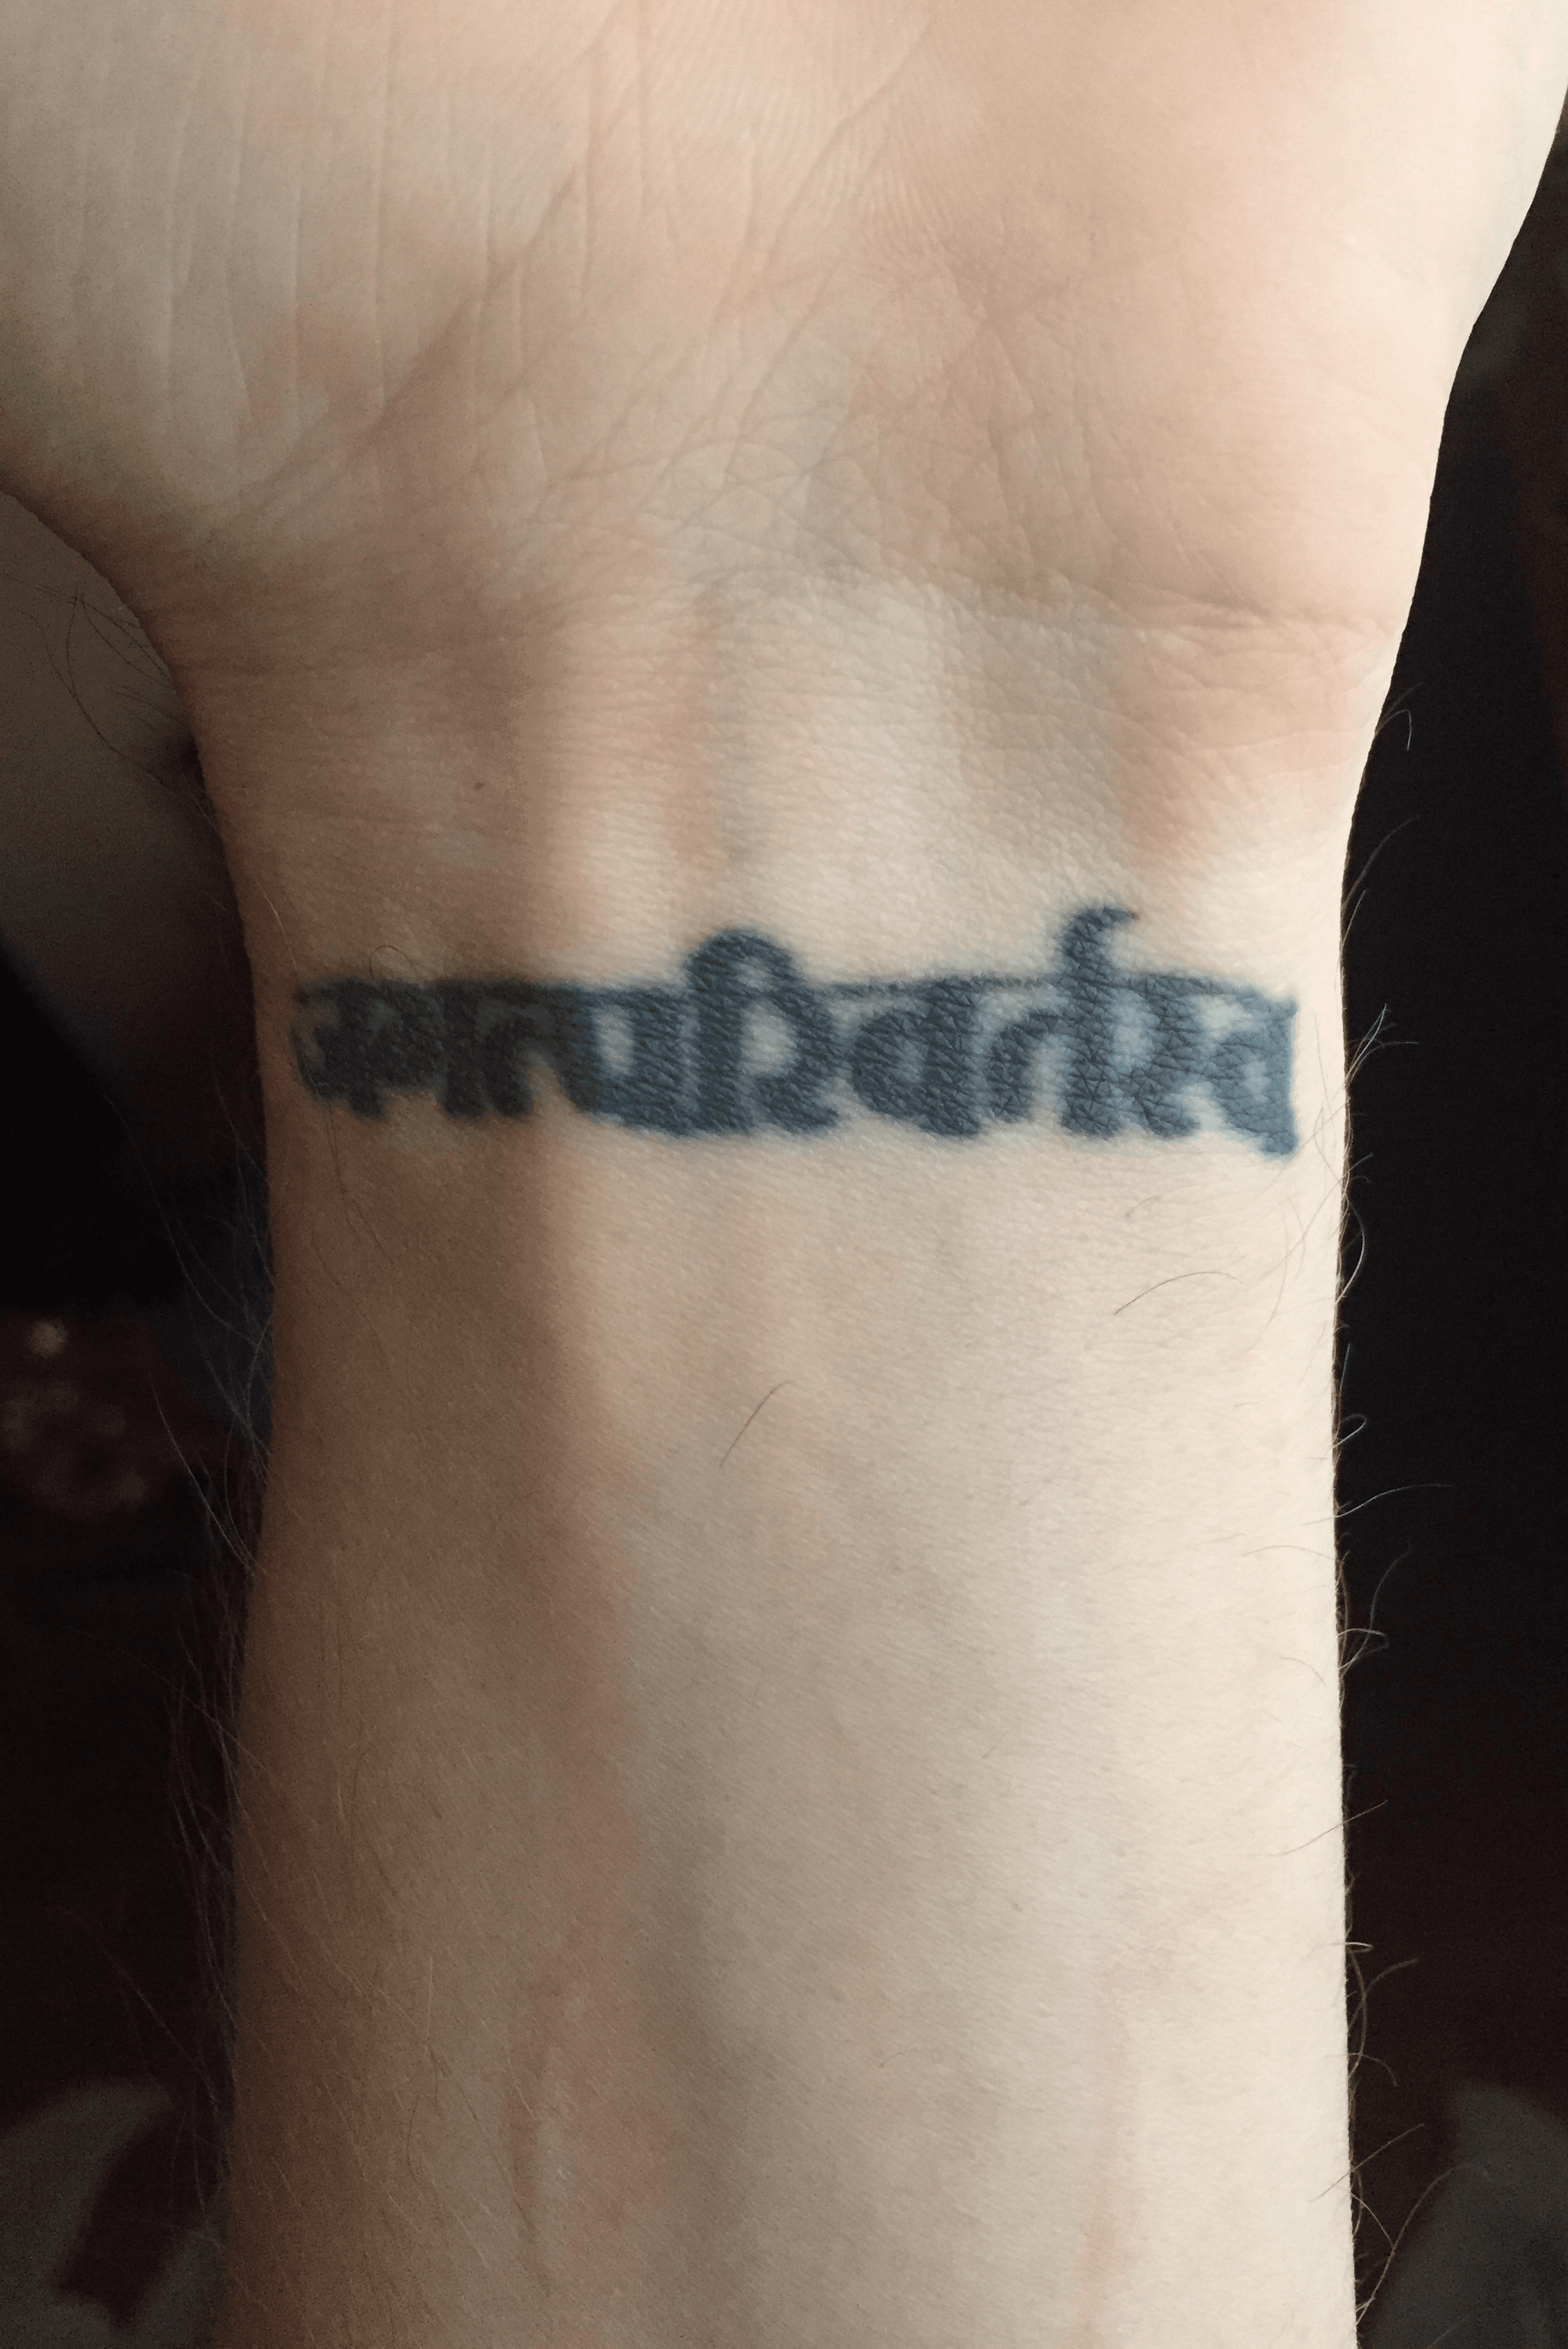 What are some good inspiring tattoo ideas in Sanskrit? - Quora